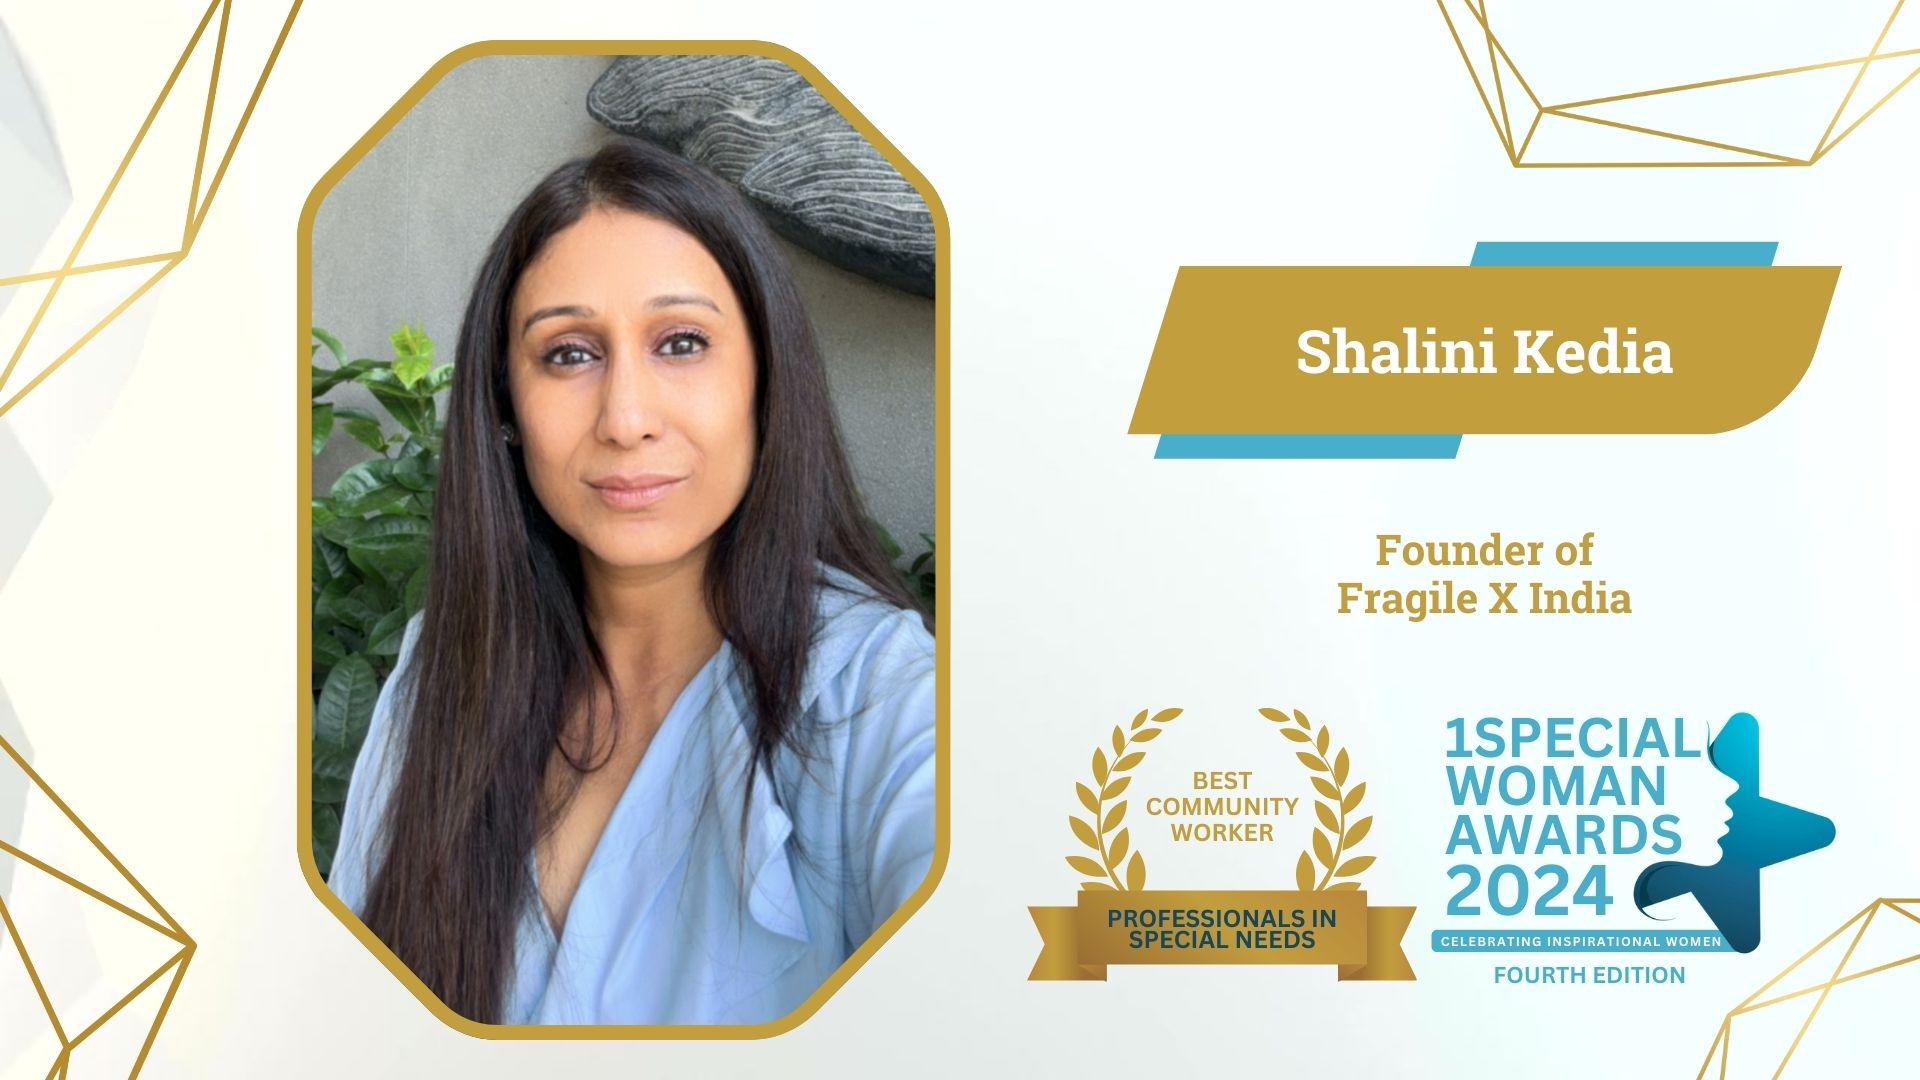 One special award 2024 winner Shalini kedia at 1special place